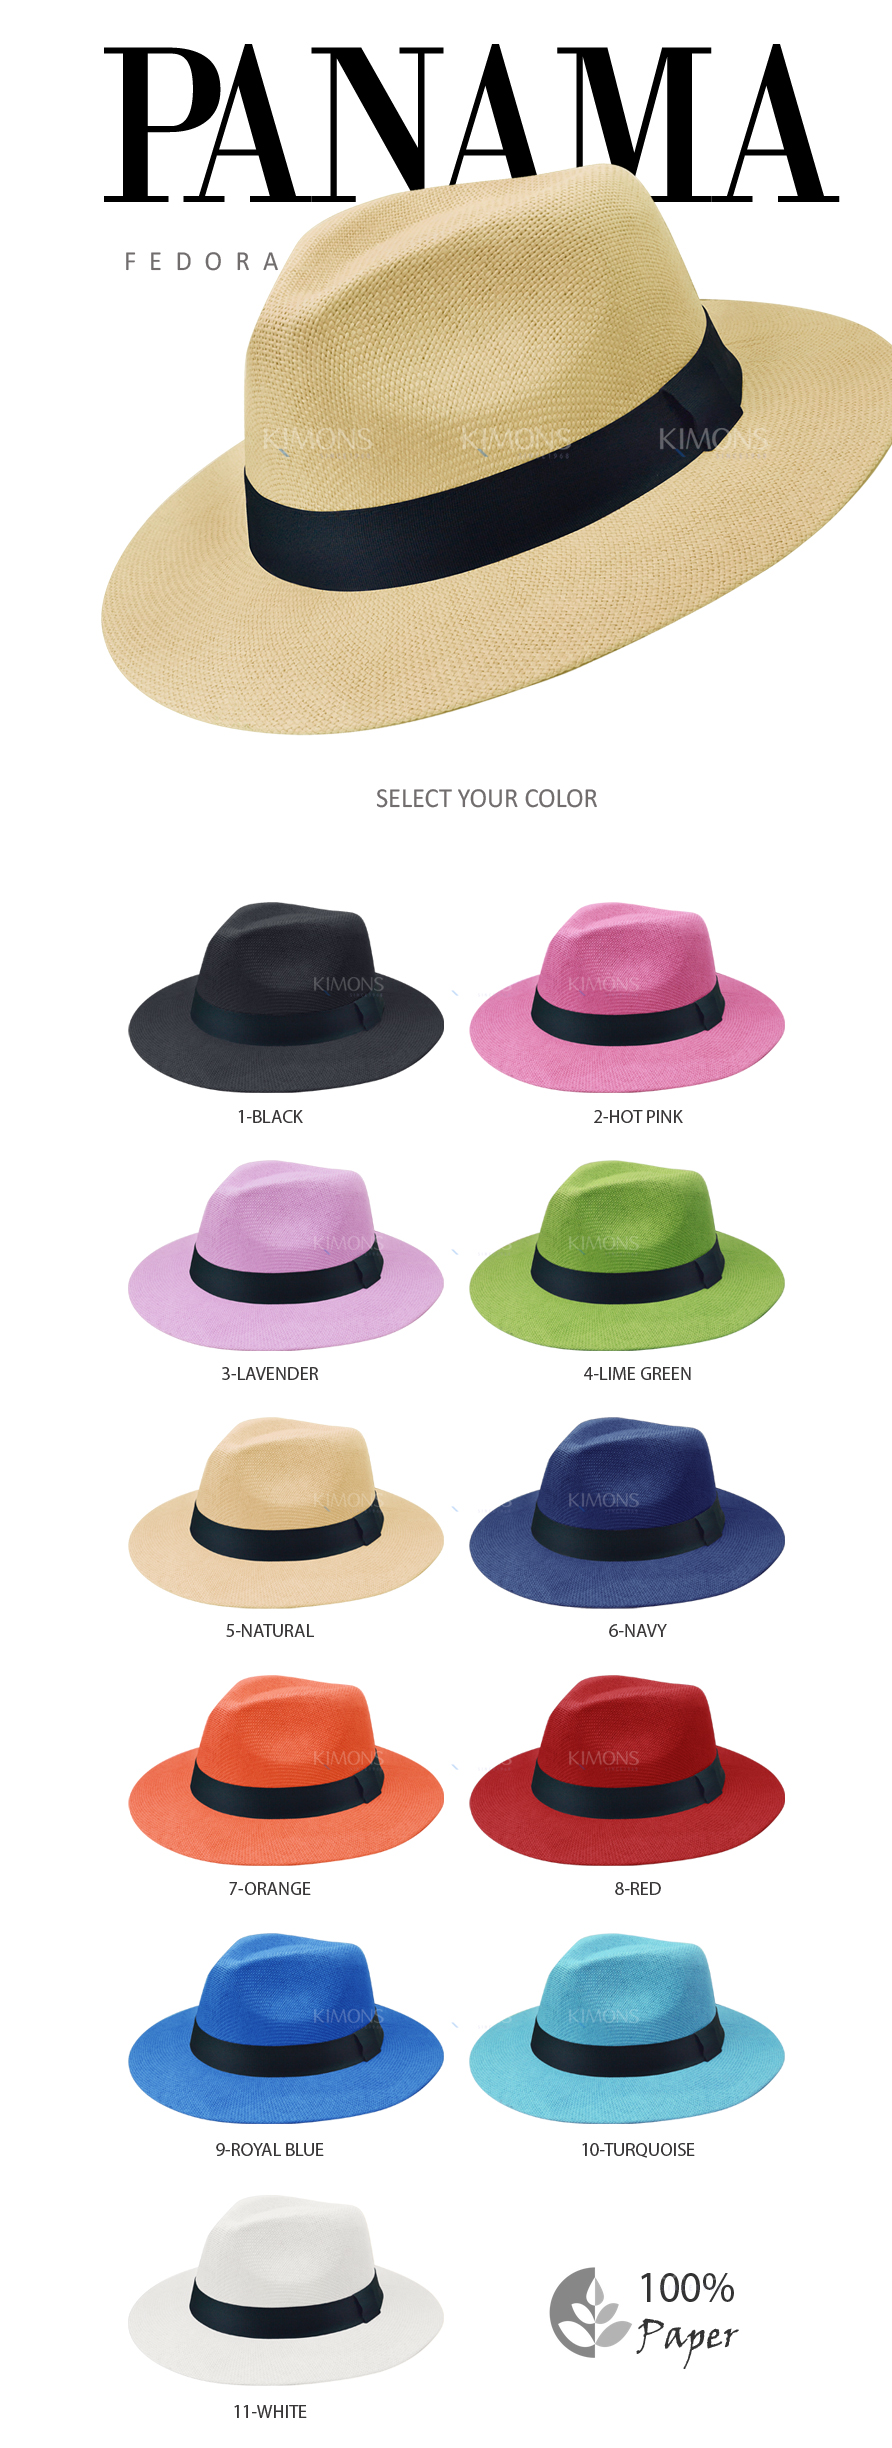 Panama Fedora hat